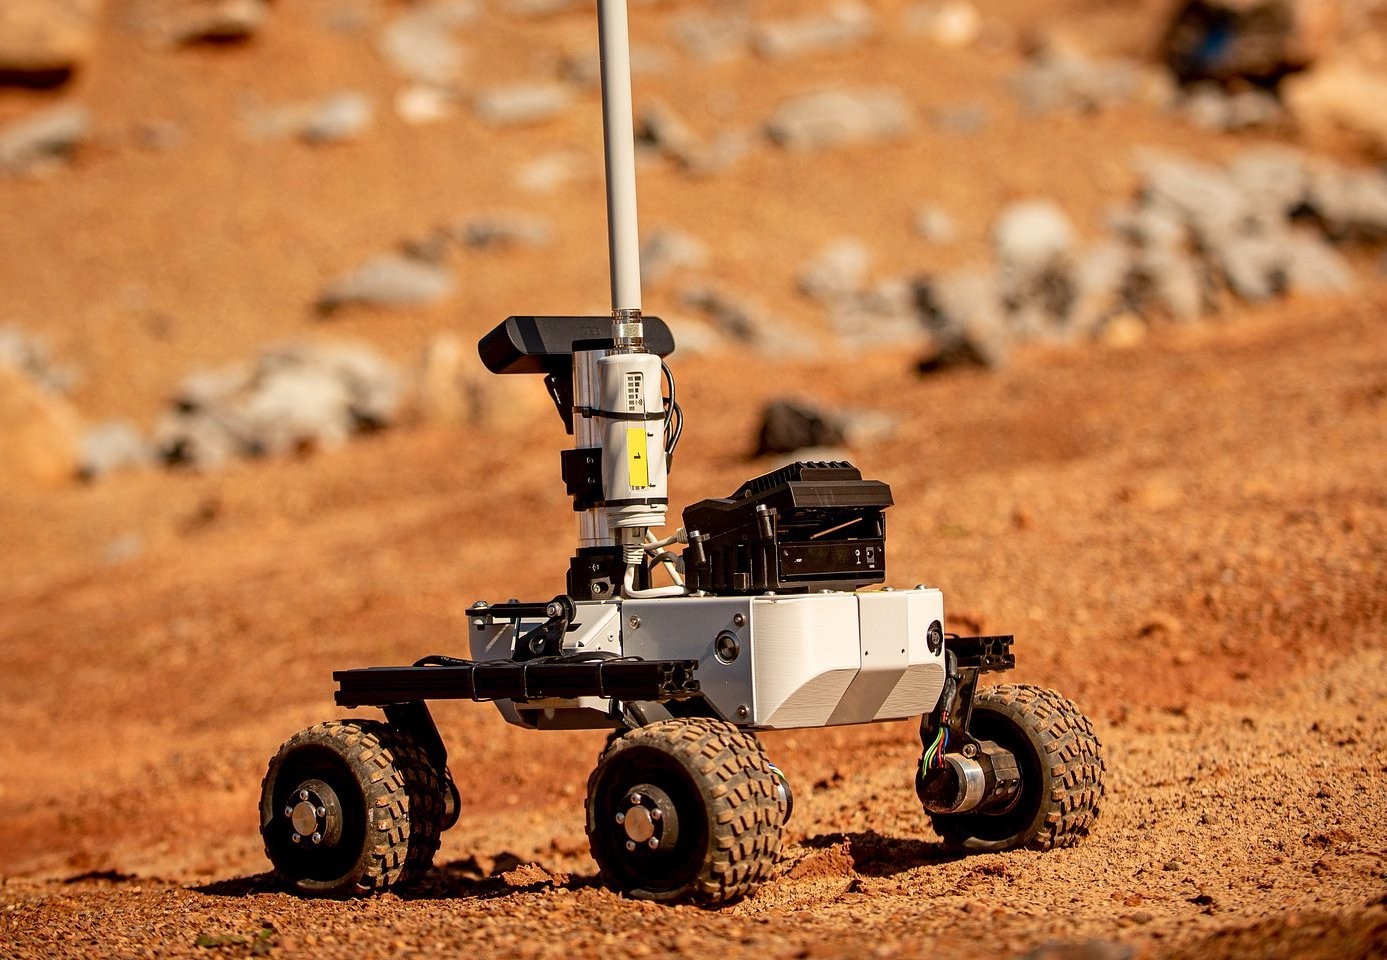 Fot. European Rover Challenge/Planet Partners [roverchallenge.eu]